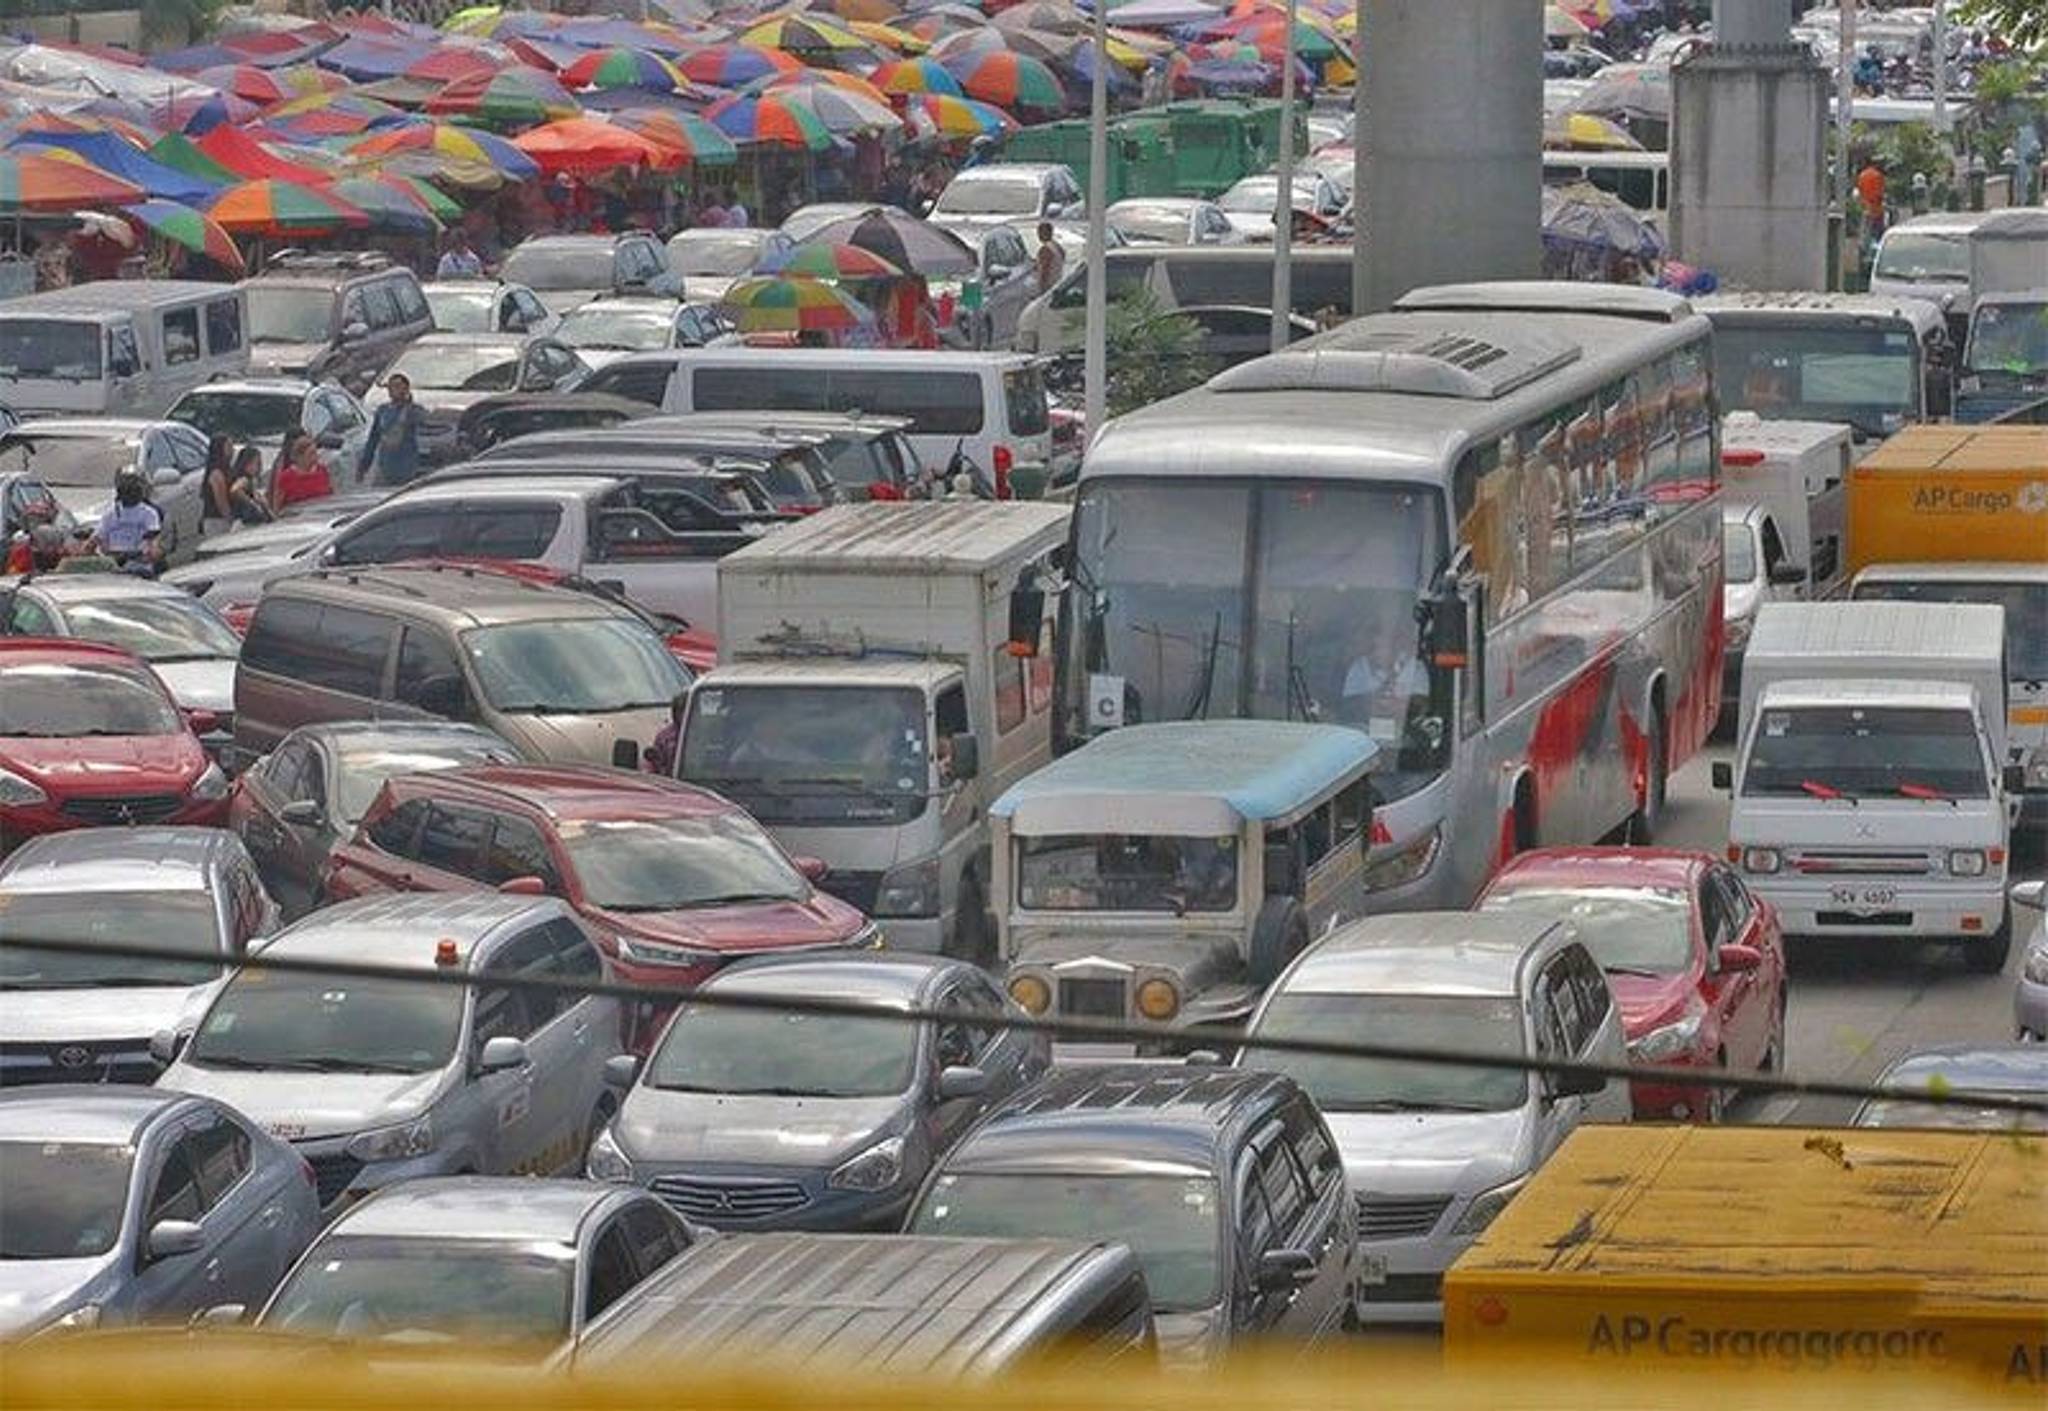 How Filipinos navigate poor public transport through community